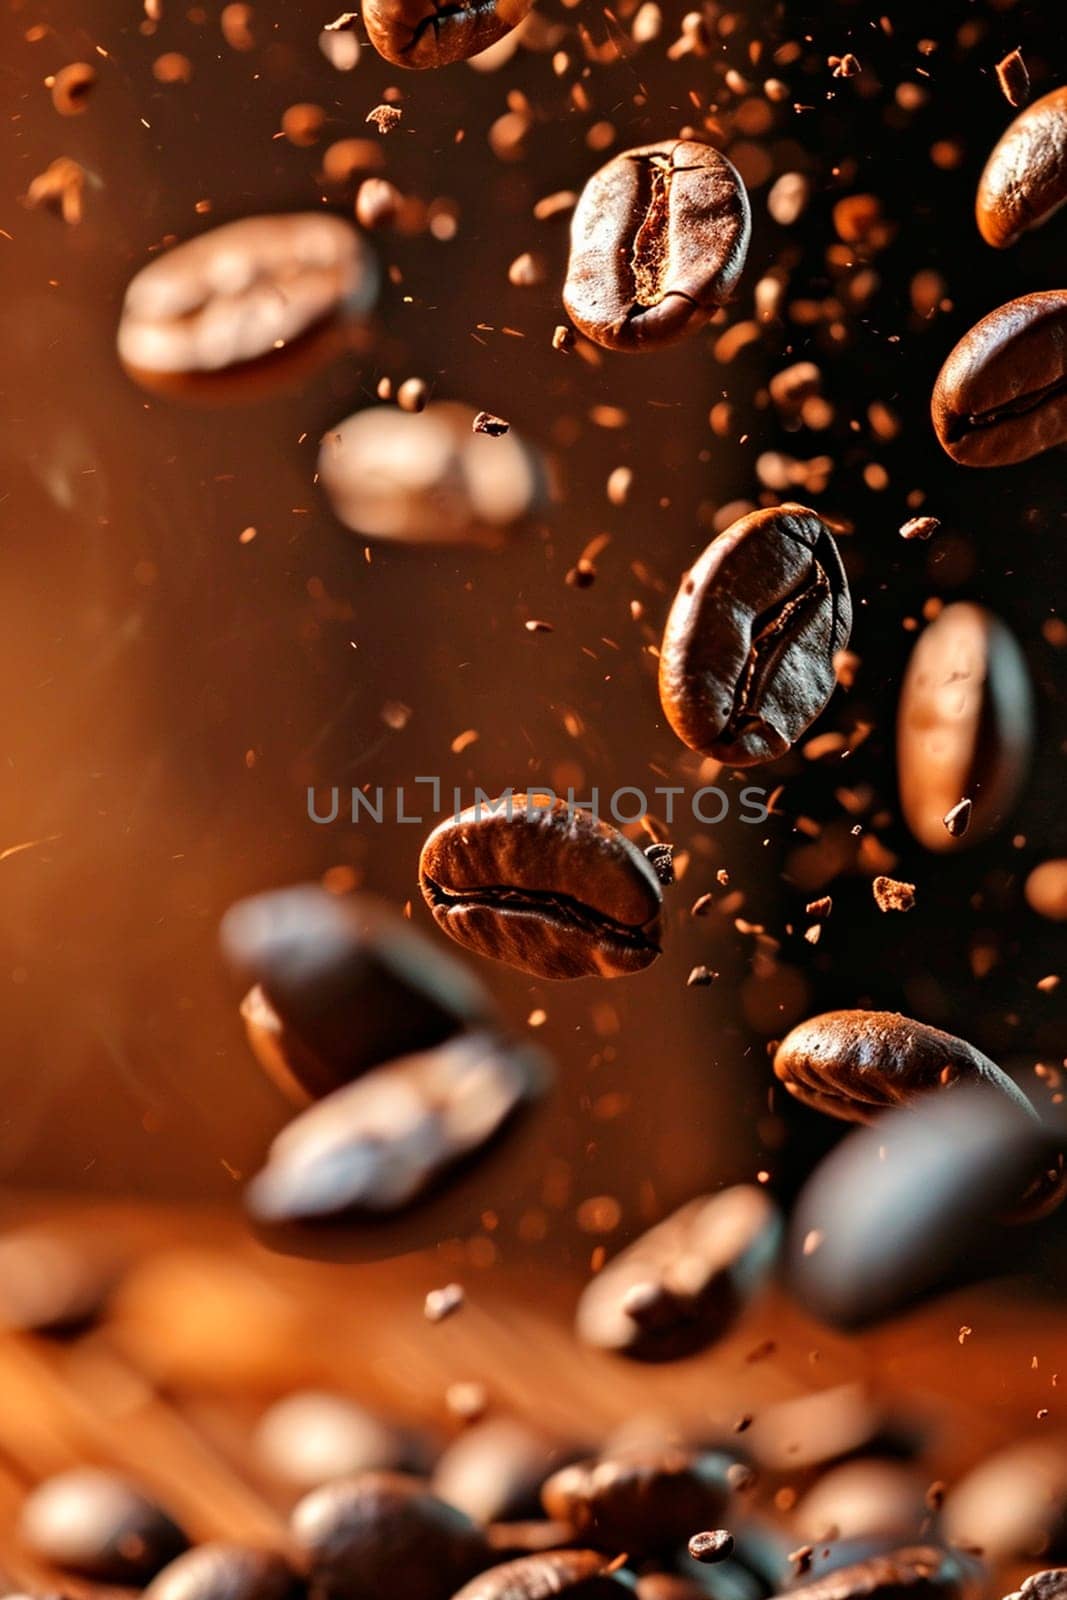 Coffee beans splash fresh. Selective focus. Drink.